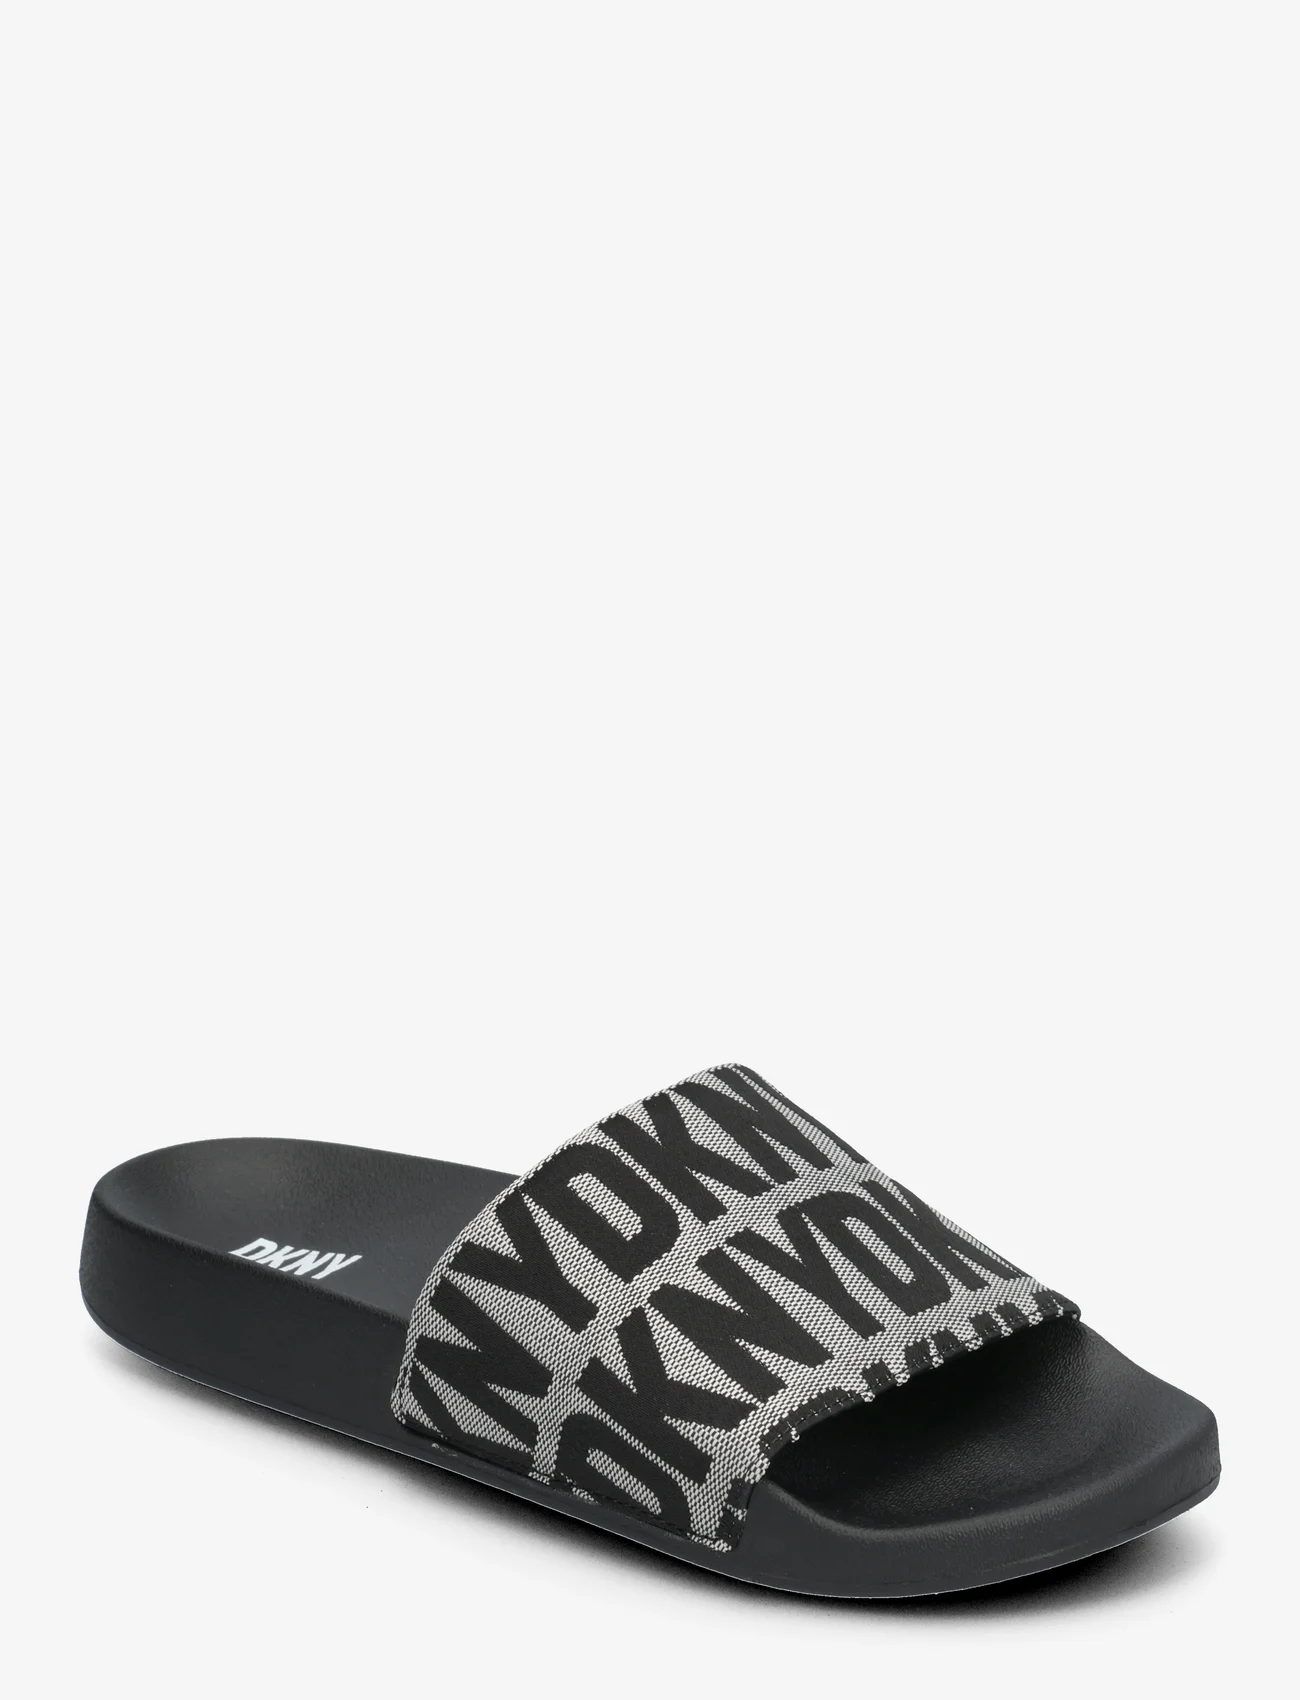 DKNY - ZELLA - FLAT SLIDE - flat sandals - 005 - black/white - 0